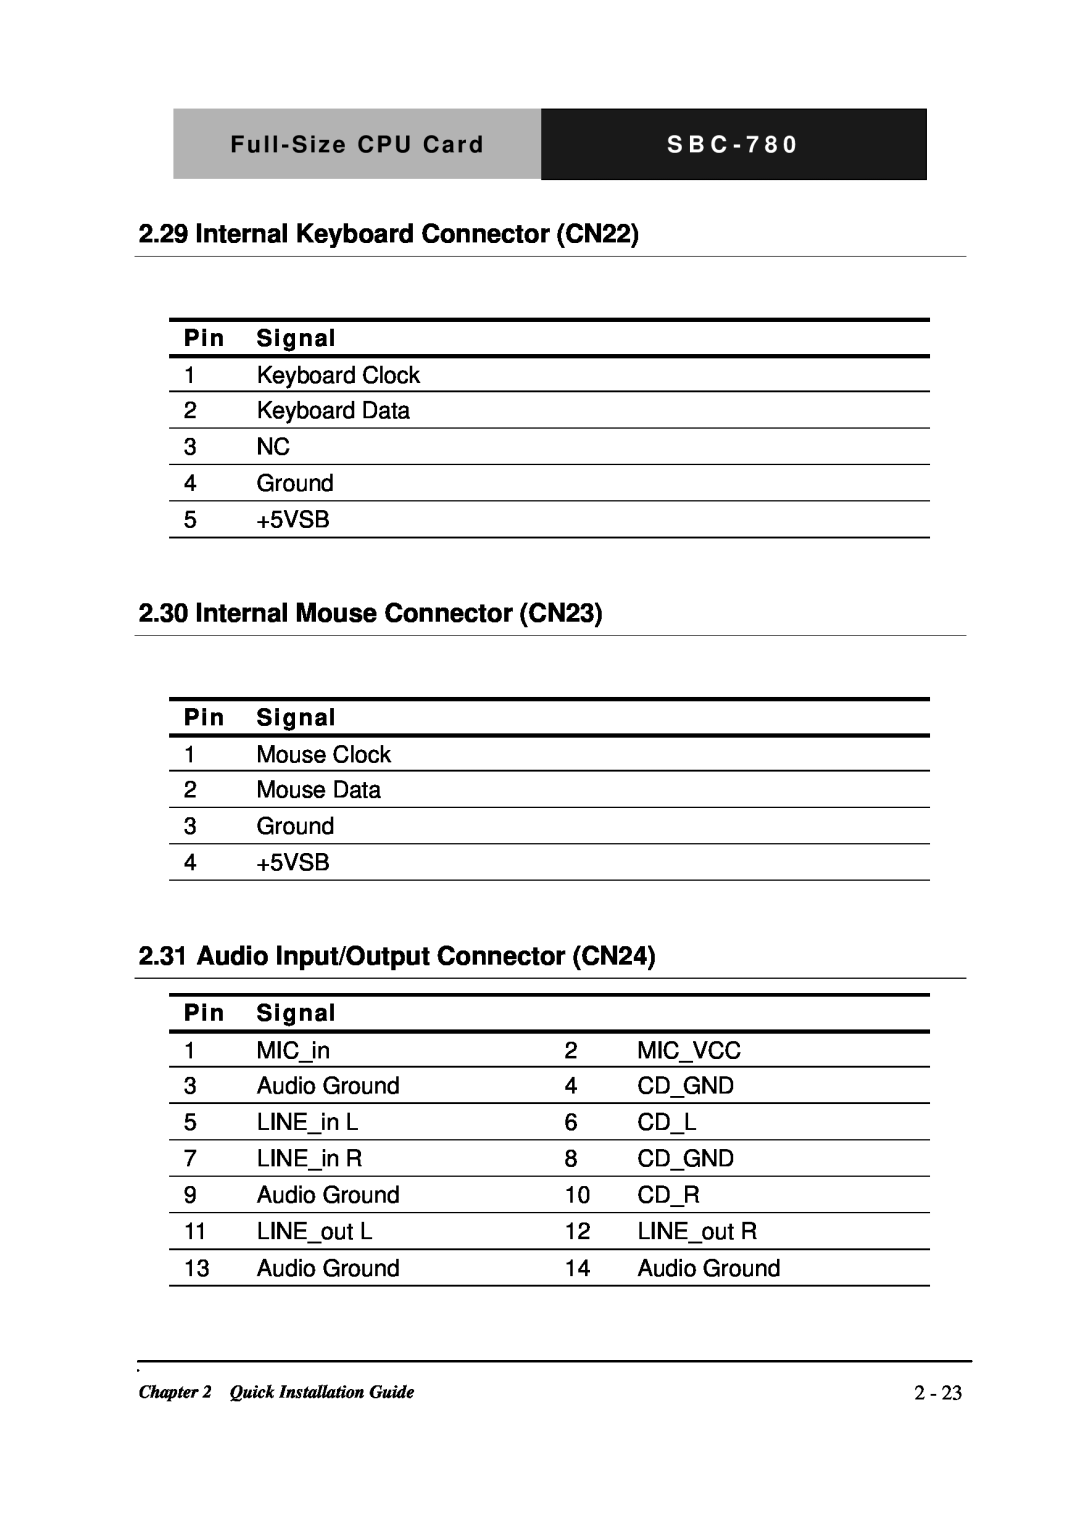 Intel SBC-780 Internal Keyboard Connector CN22, 2.30Internal Mouse Connector CN23, 2.31Audio Input/Output Connector CN24 